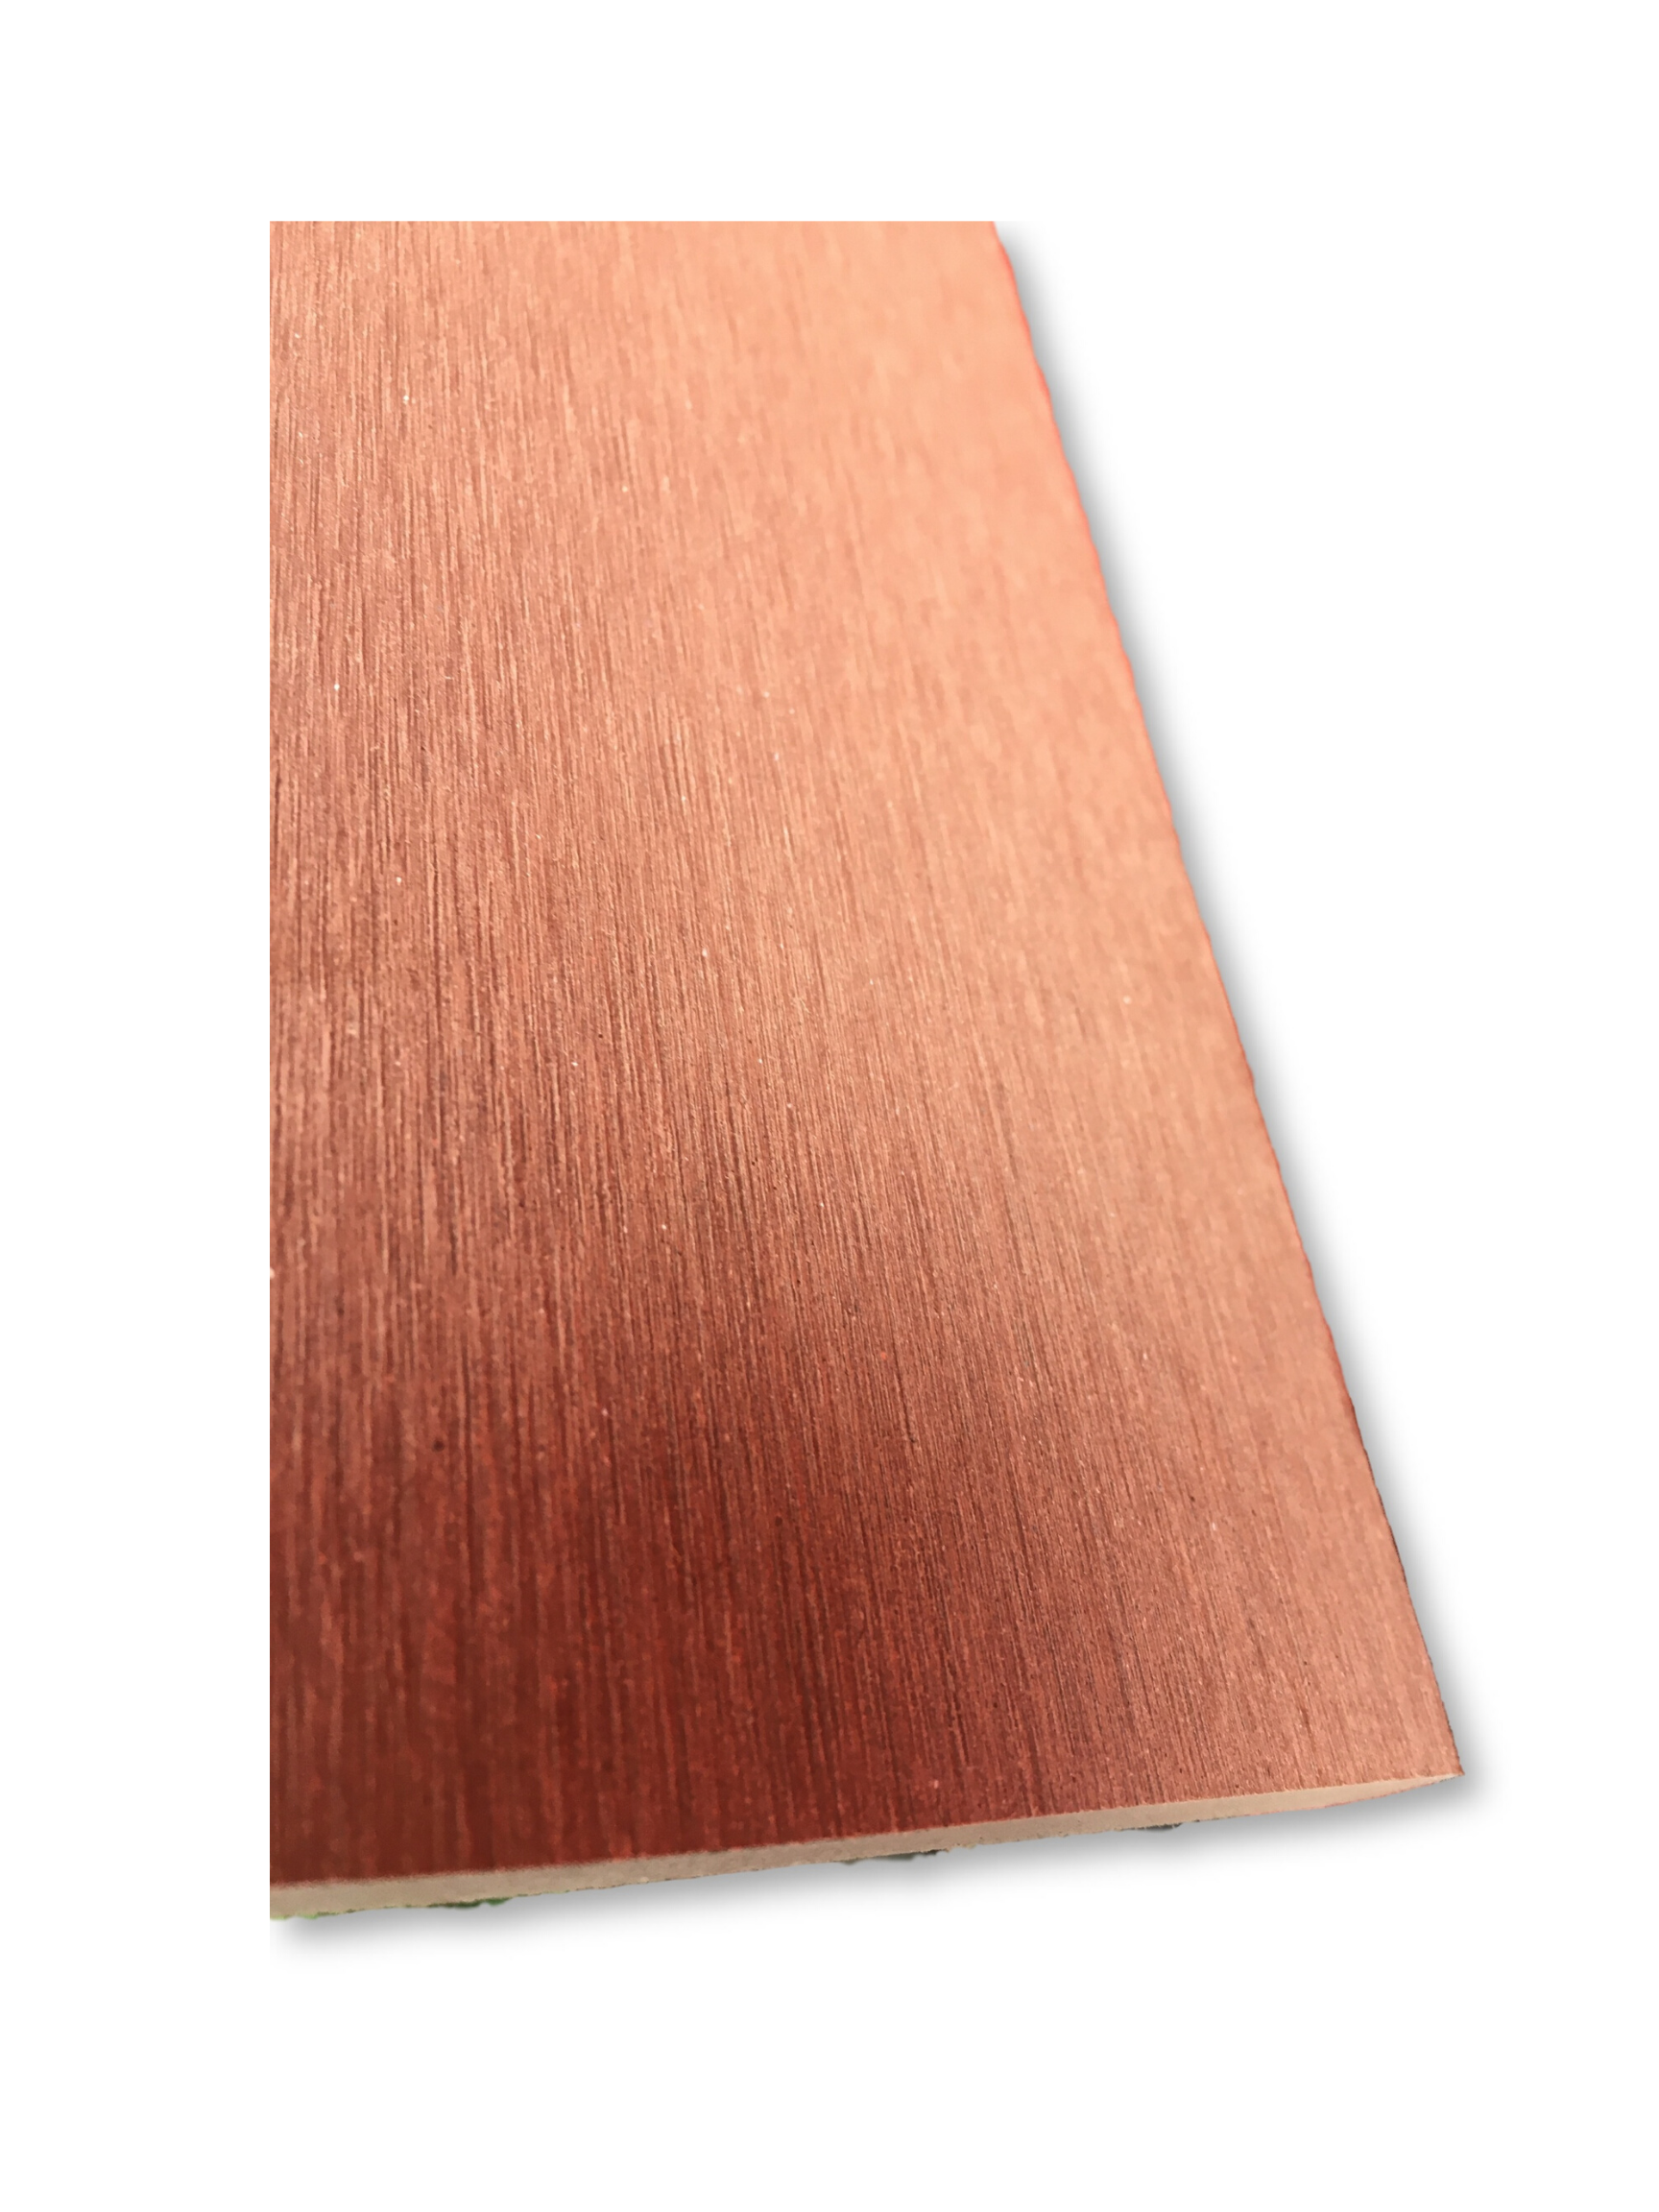 Light Brown Skirting Board 100 X 12mm X 5.4m